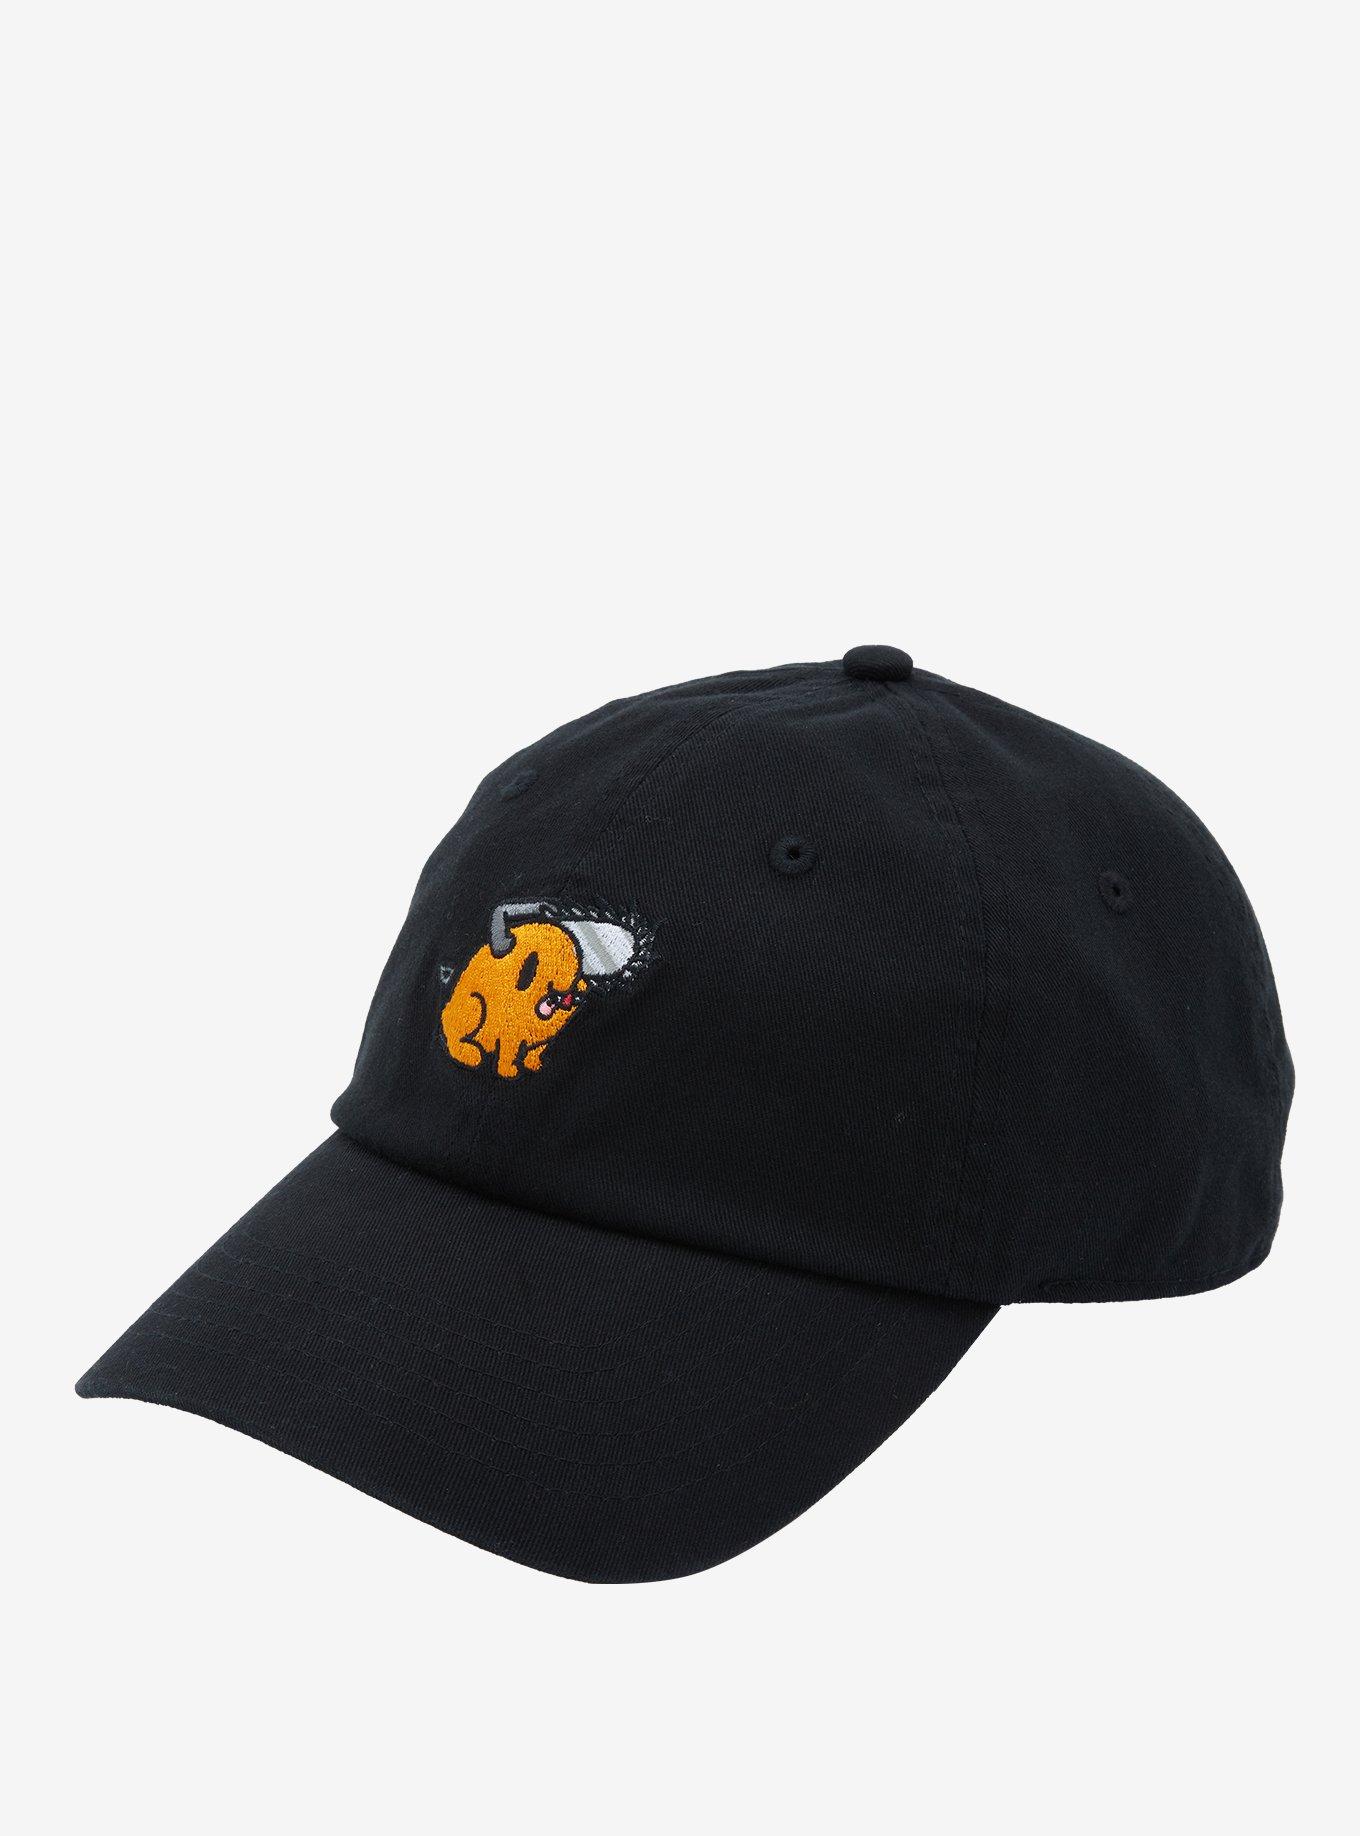 Tech Design Bad Bunny Baseball Cap Embroidered Cotton Adjustable Dad Hat